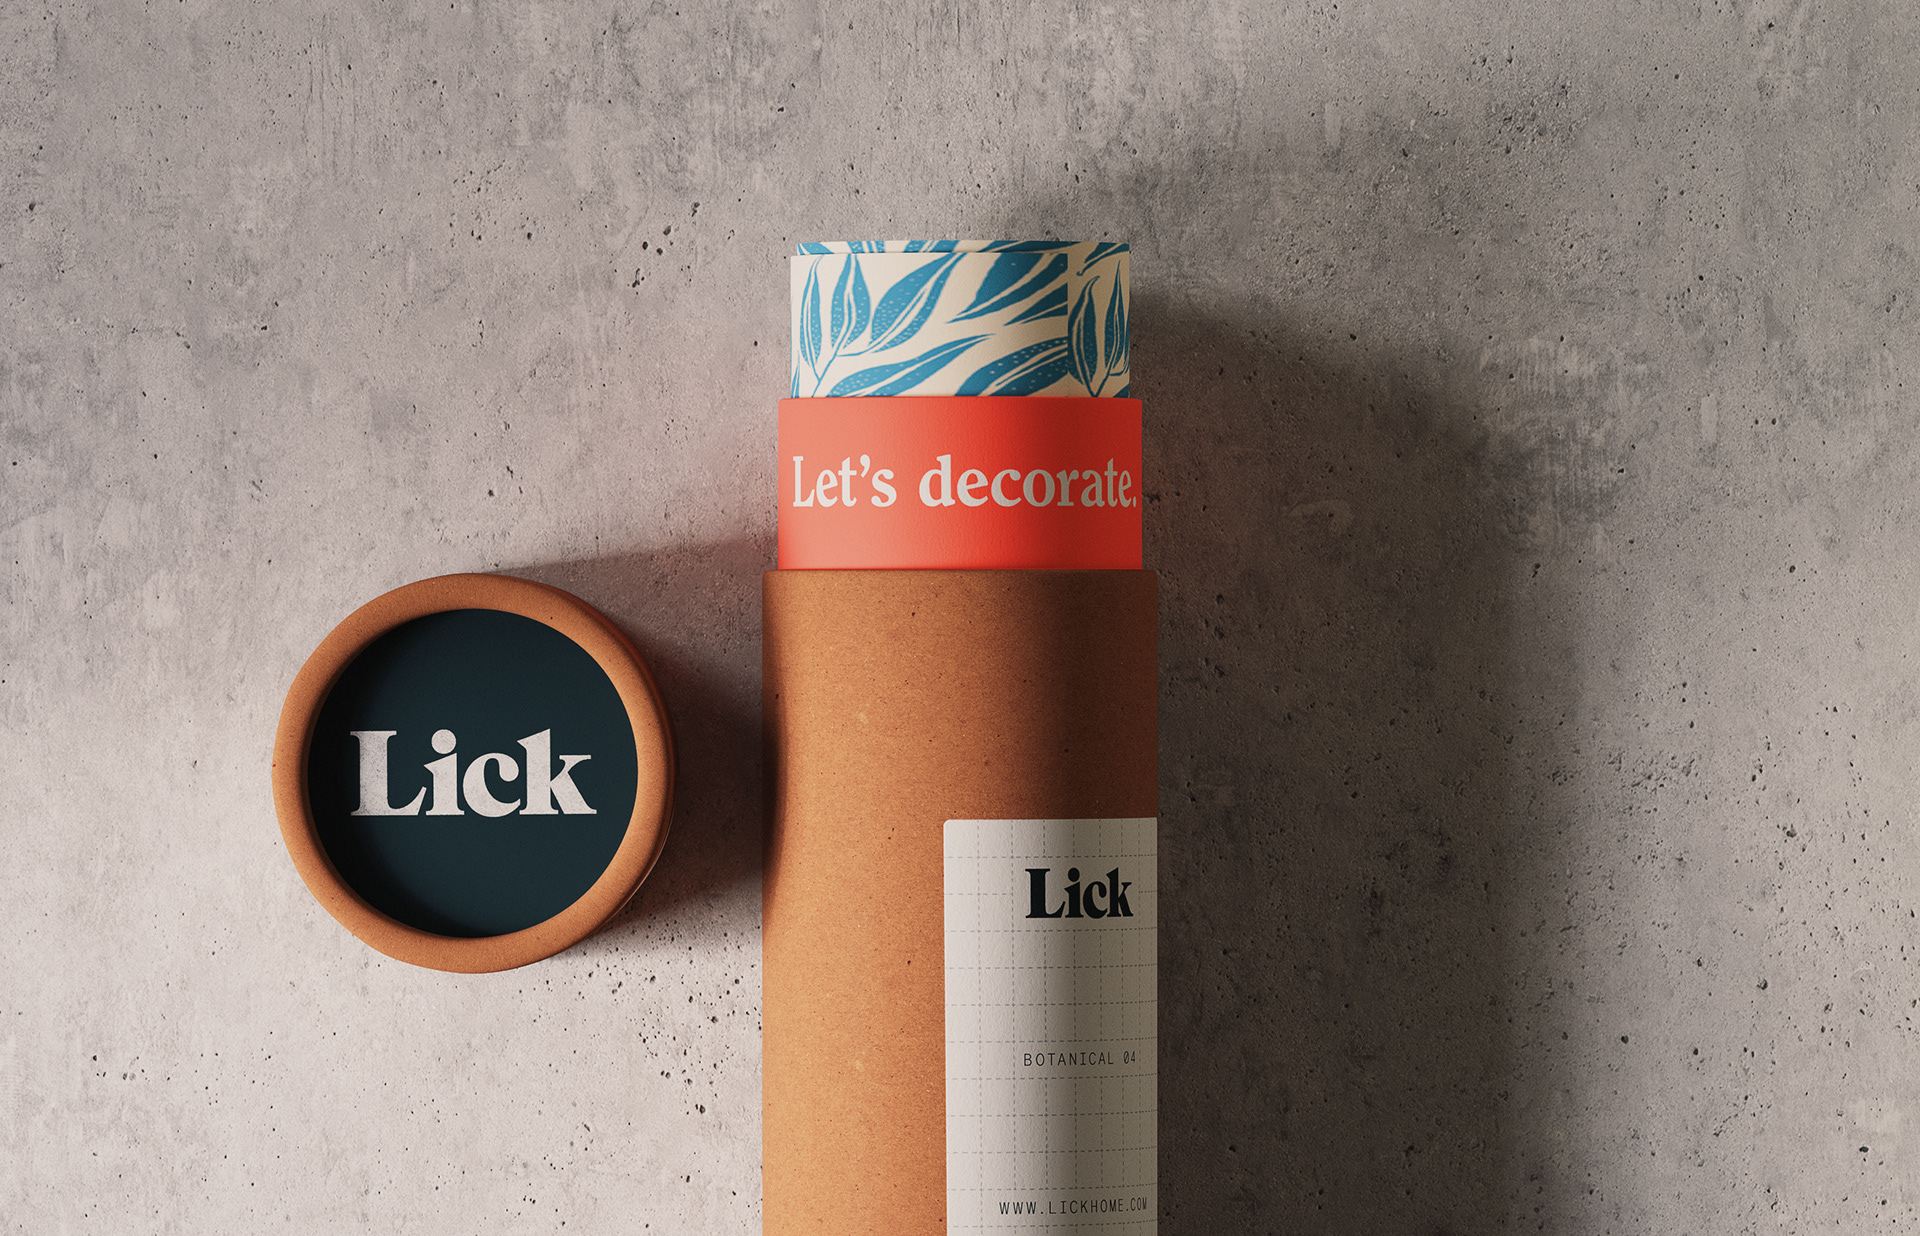 Christian Louboutin Lipstick  Dieline - Design, Branding